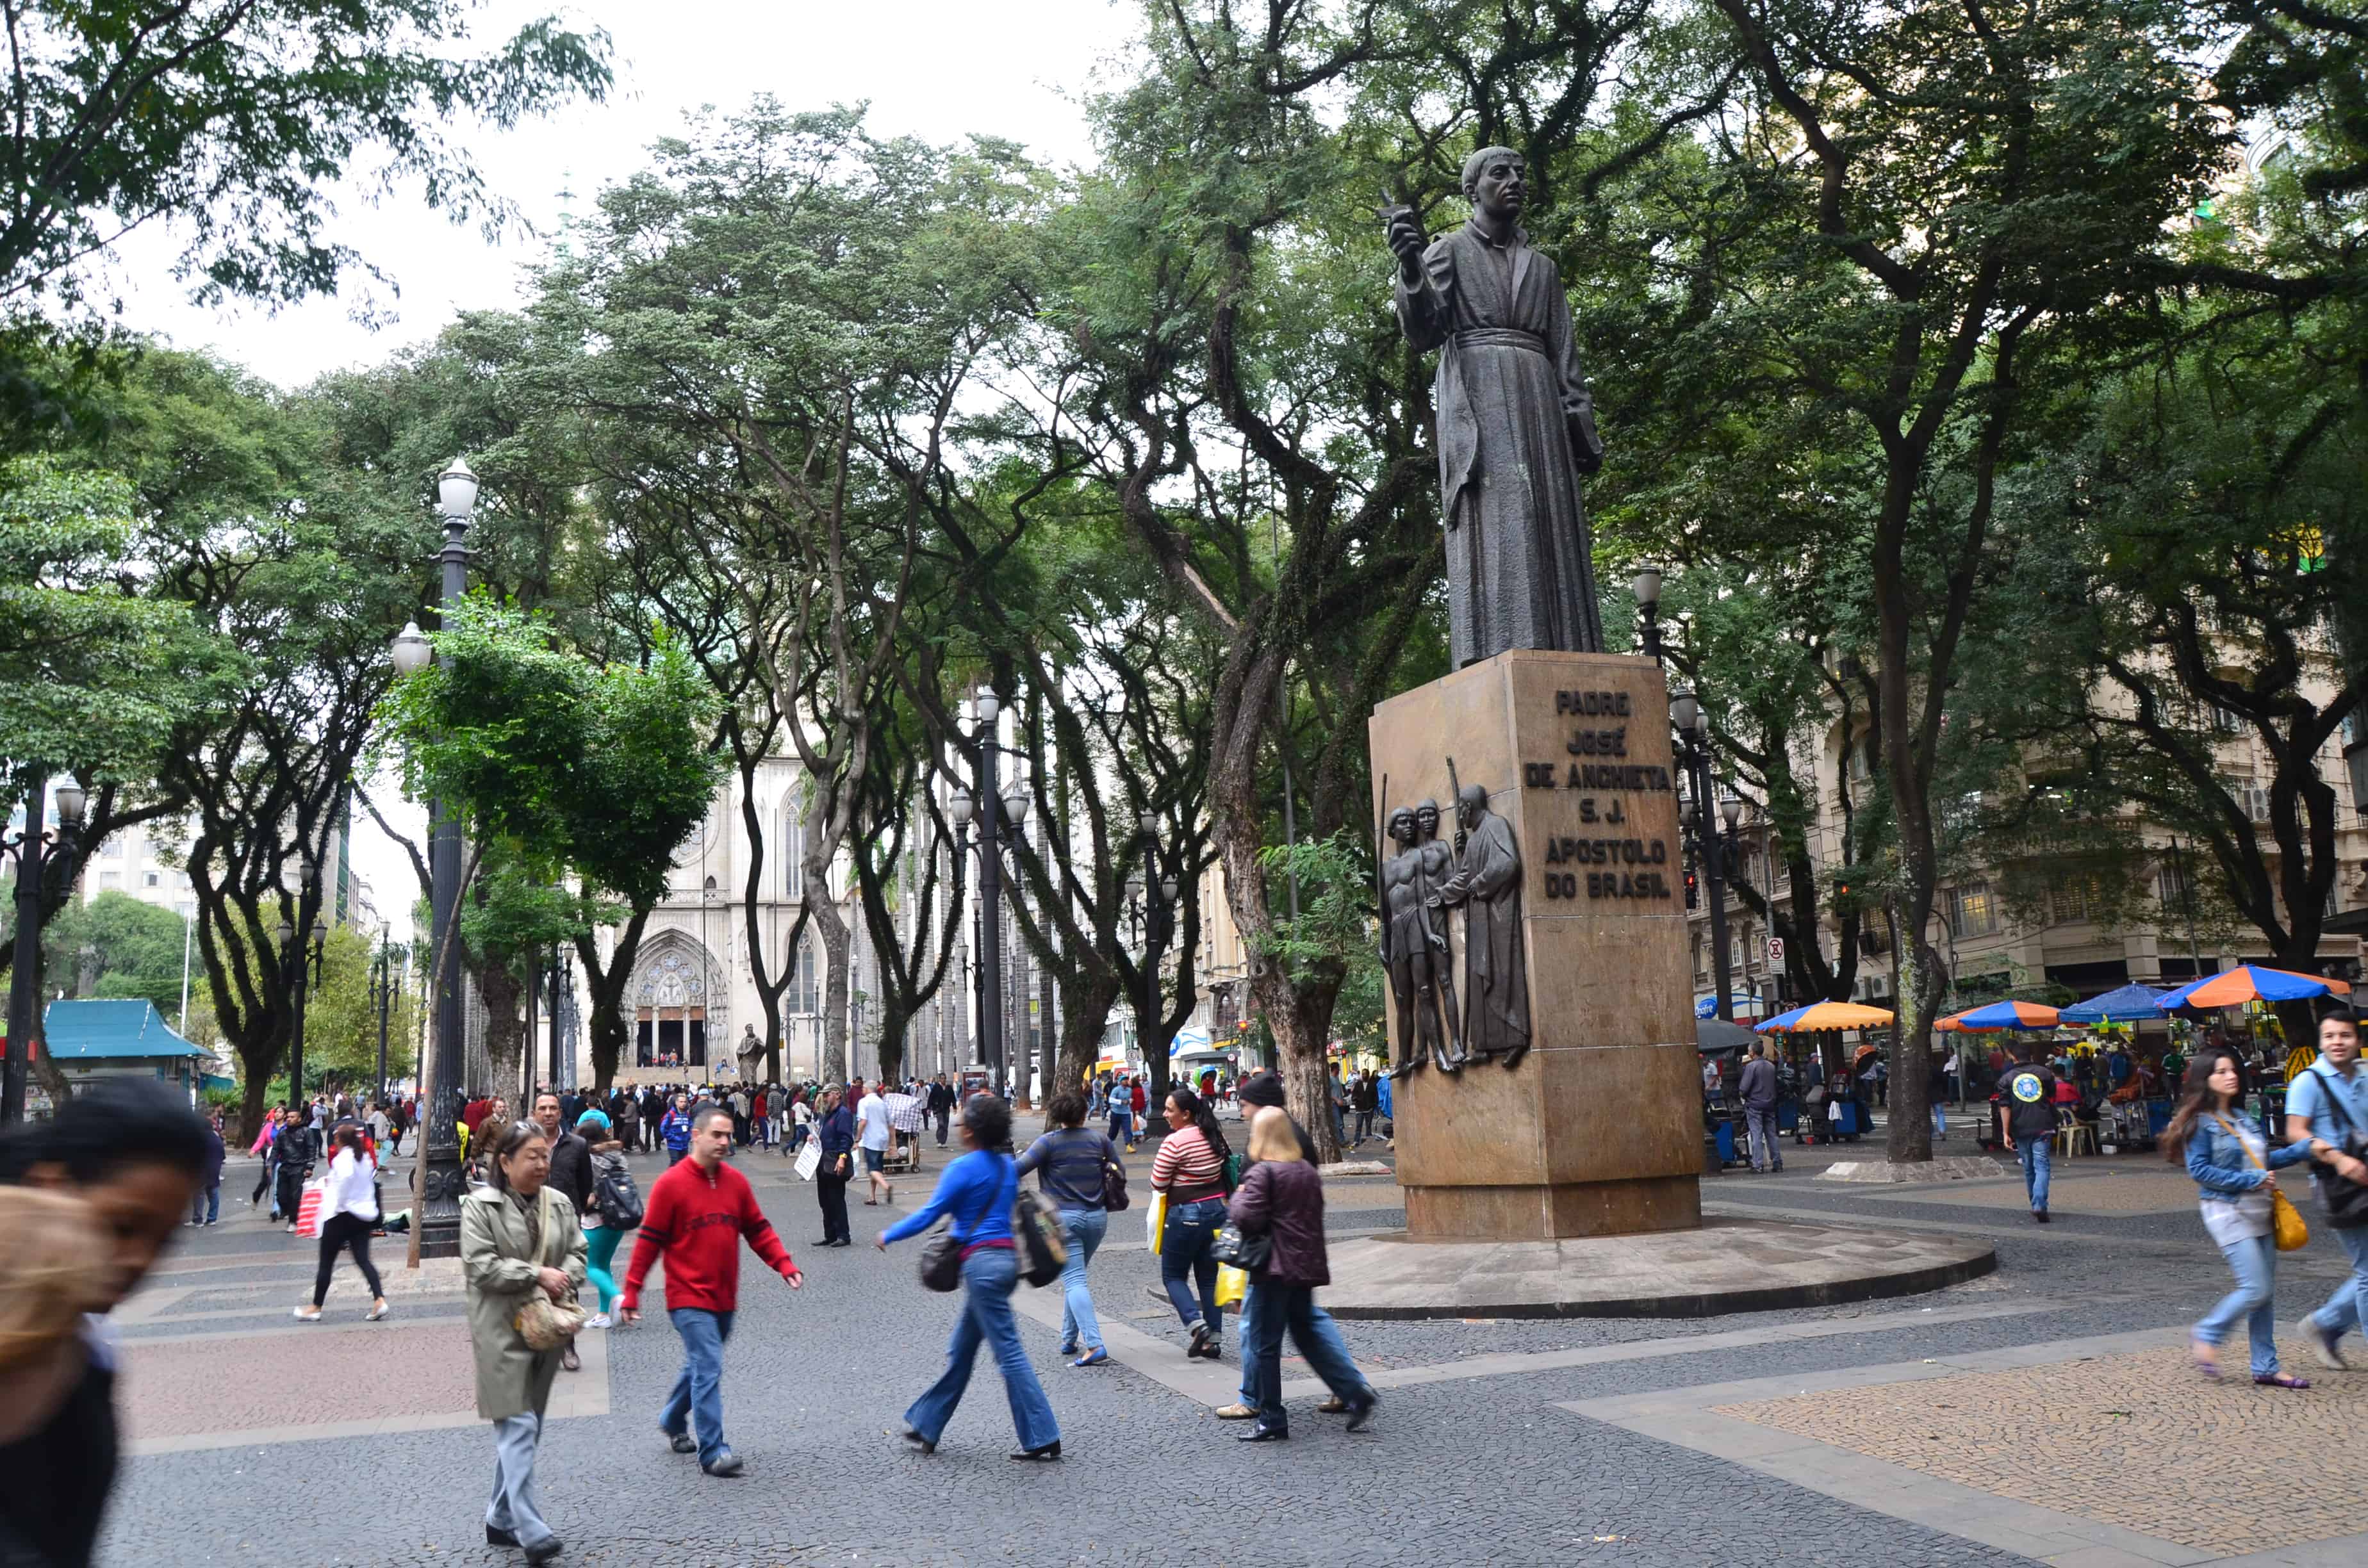 Praça da Sé in São Paulo, Brazil